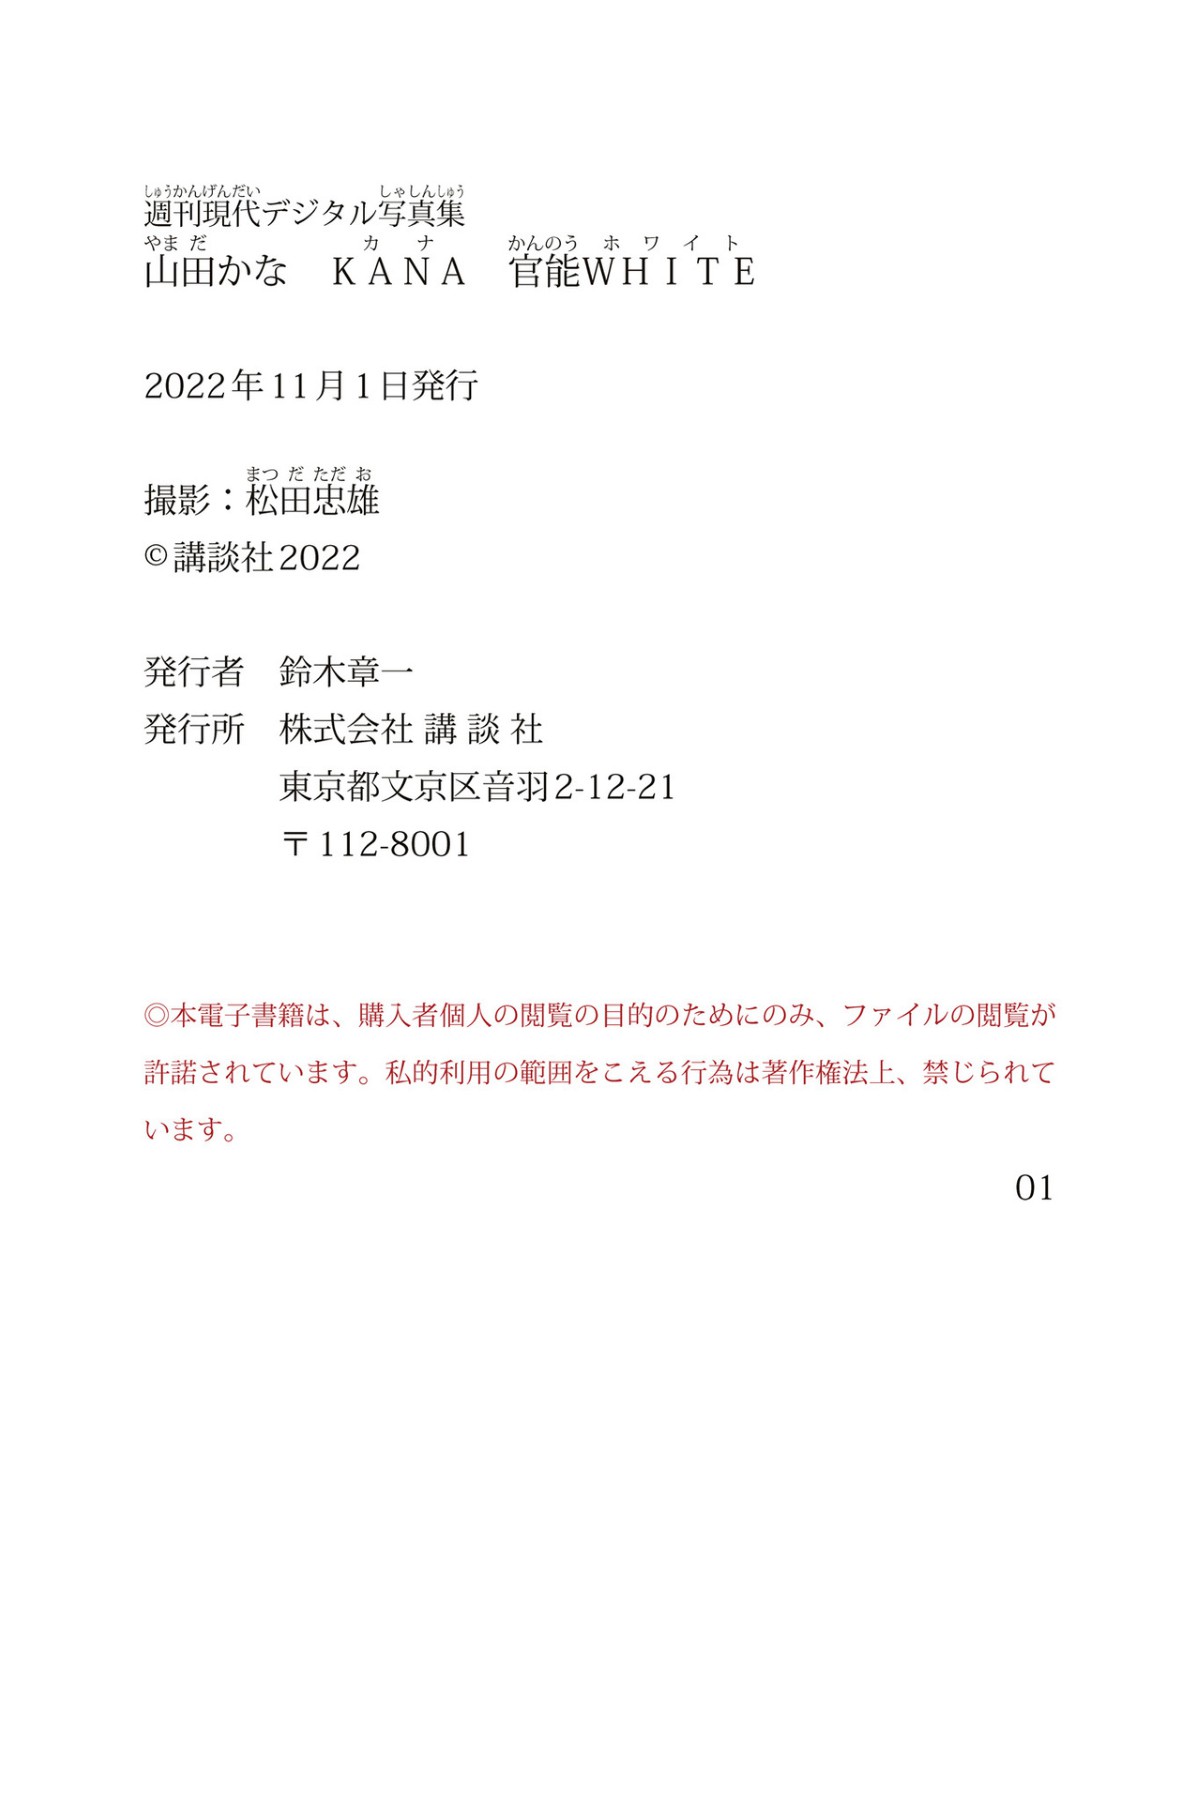 Photobook 2022 10 24 Yamada Kana 山田かな Sensual White Weekly Contemporary Digital Photo Collection 0066 9915715841.jpg